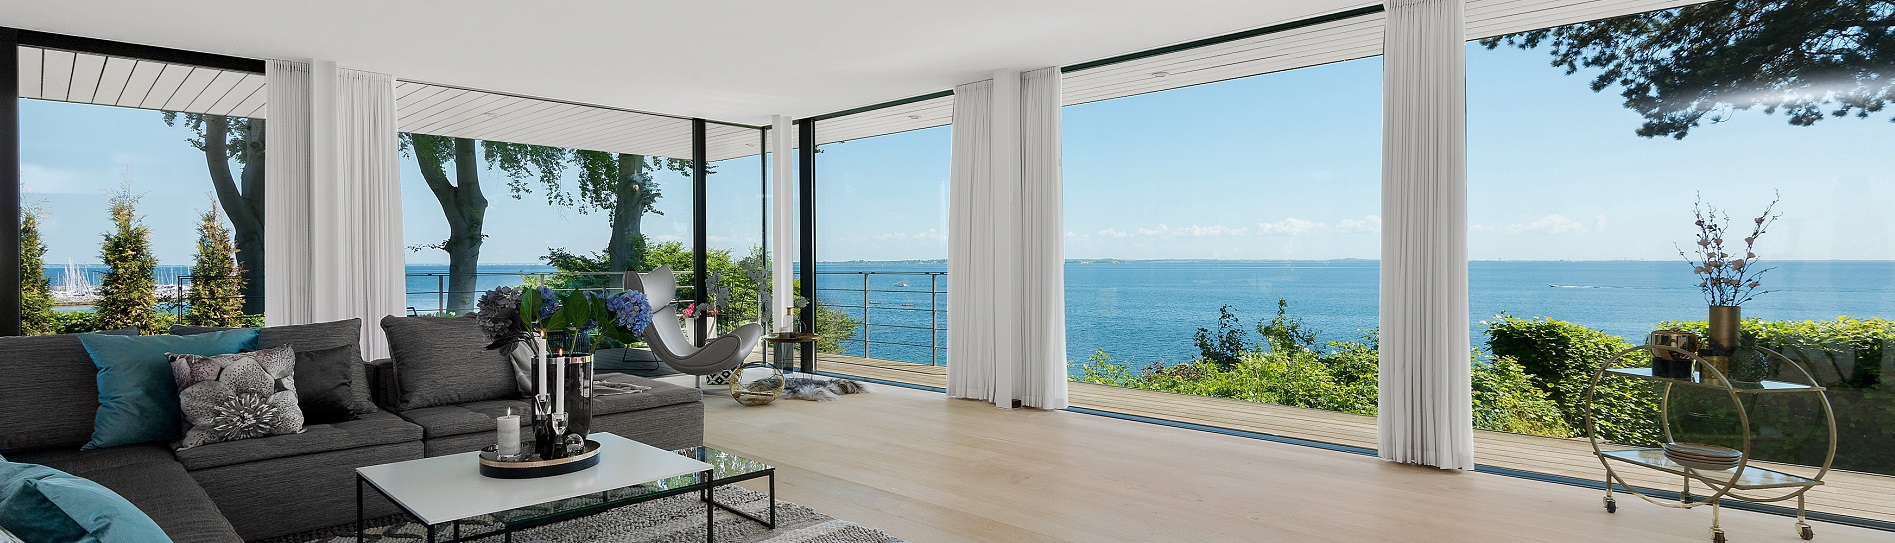 Fantastic luxury villa overlooking the water